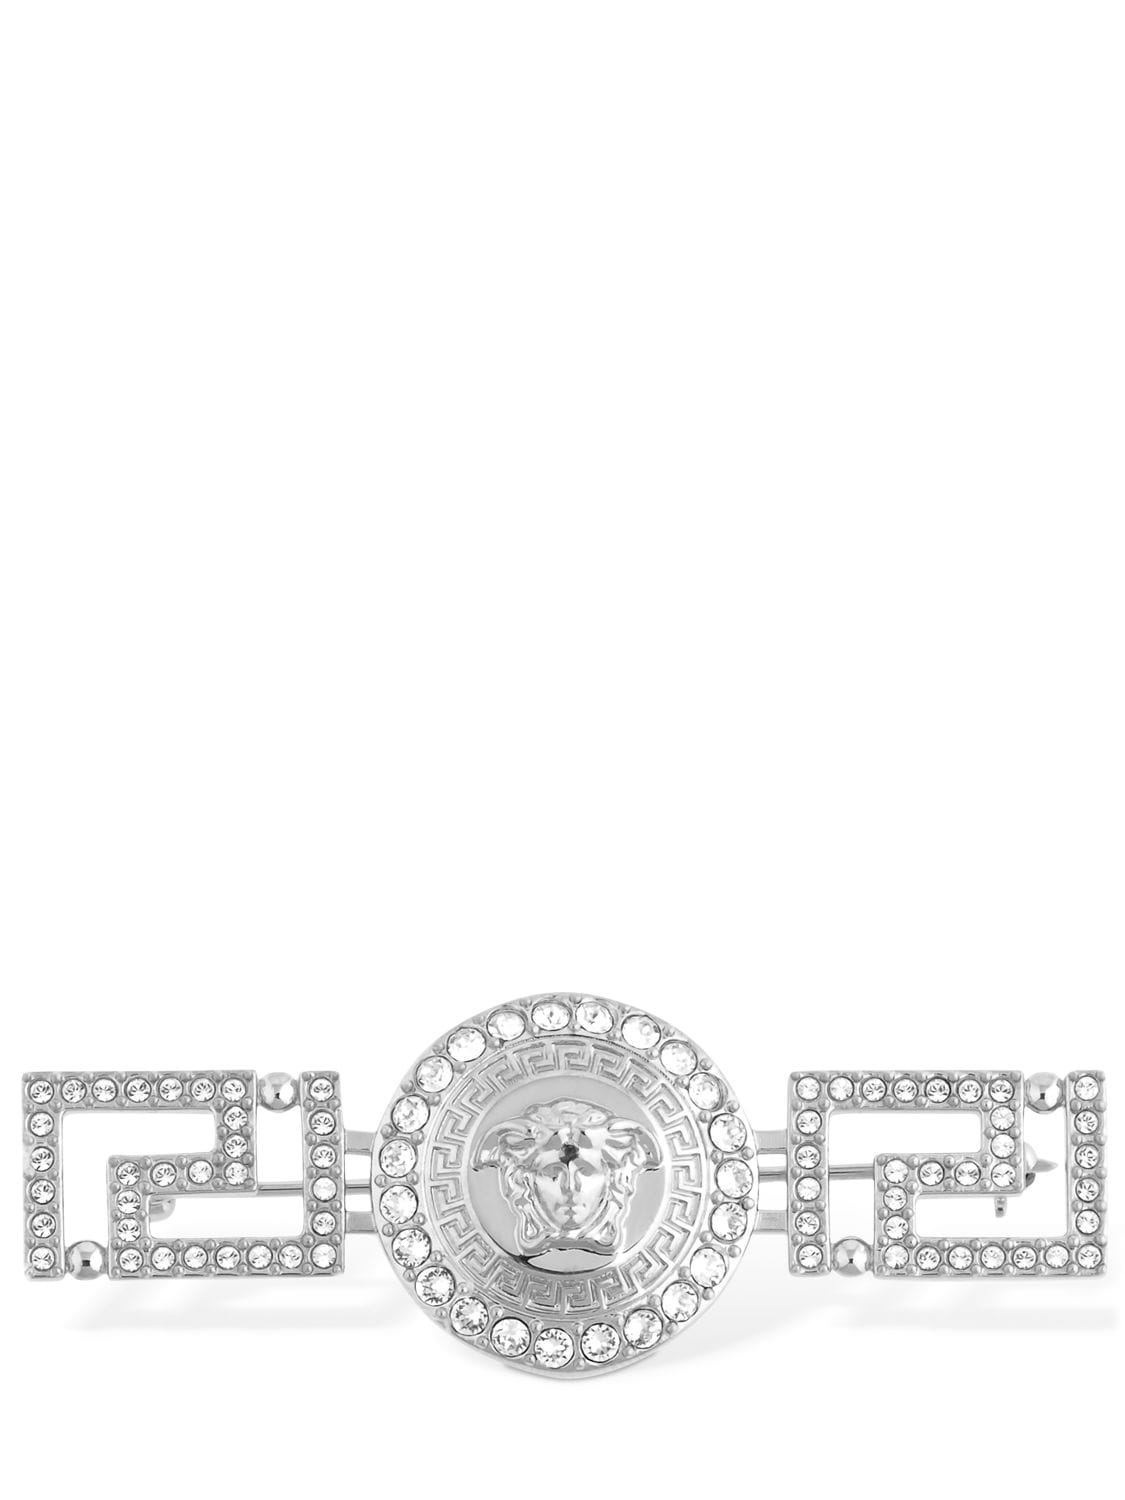 Versace Greek Motif Brooch W/ Crystals In Silver